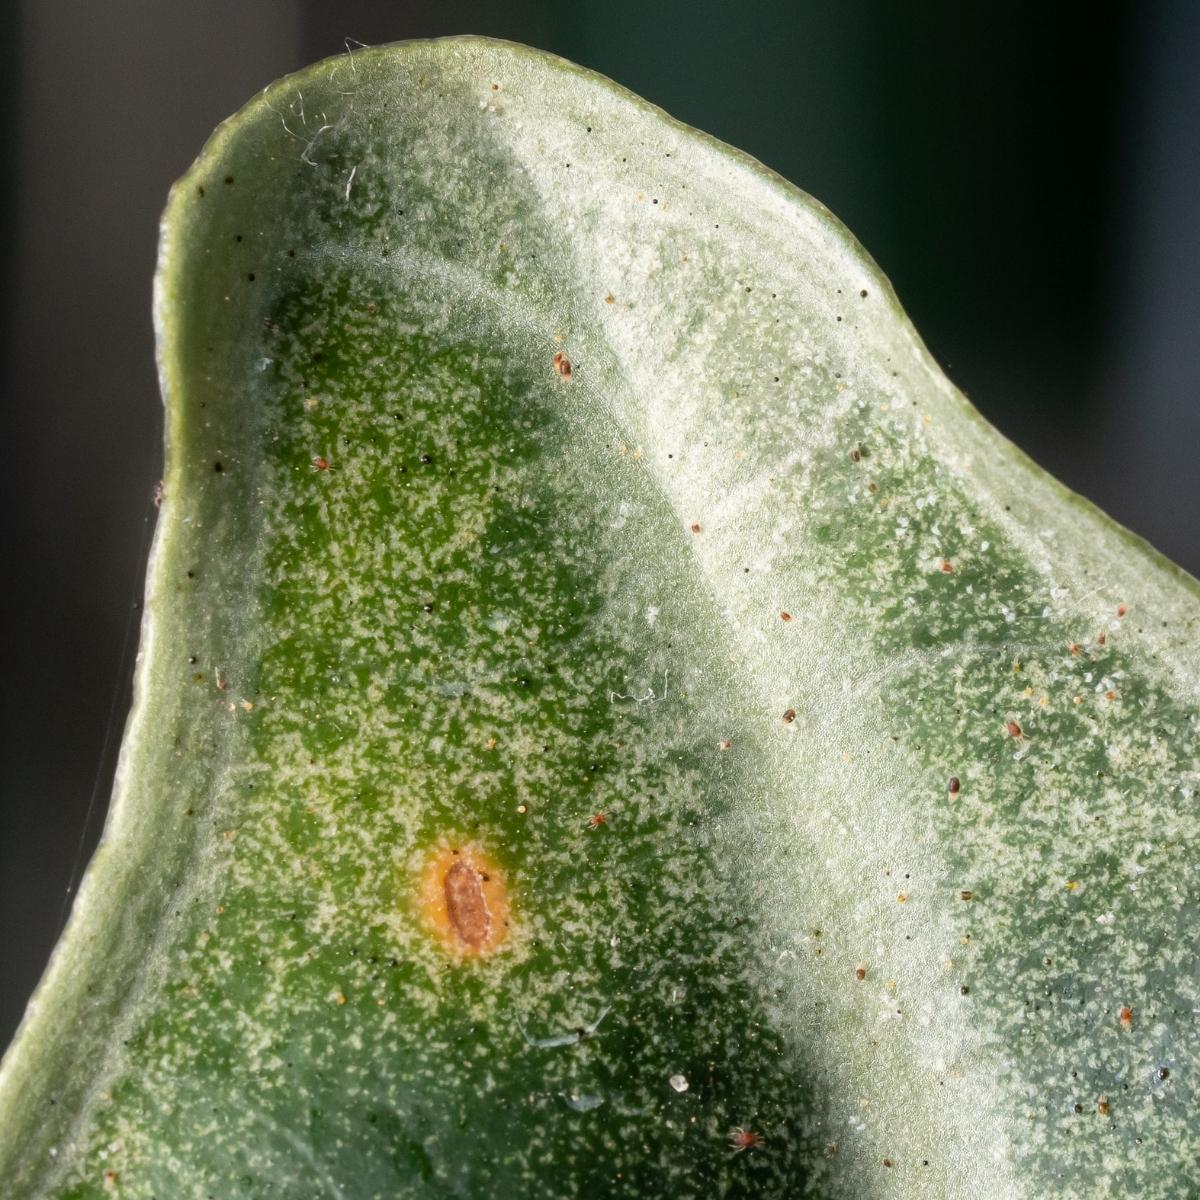 spider mite damage on leaf